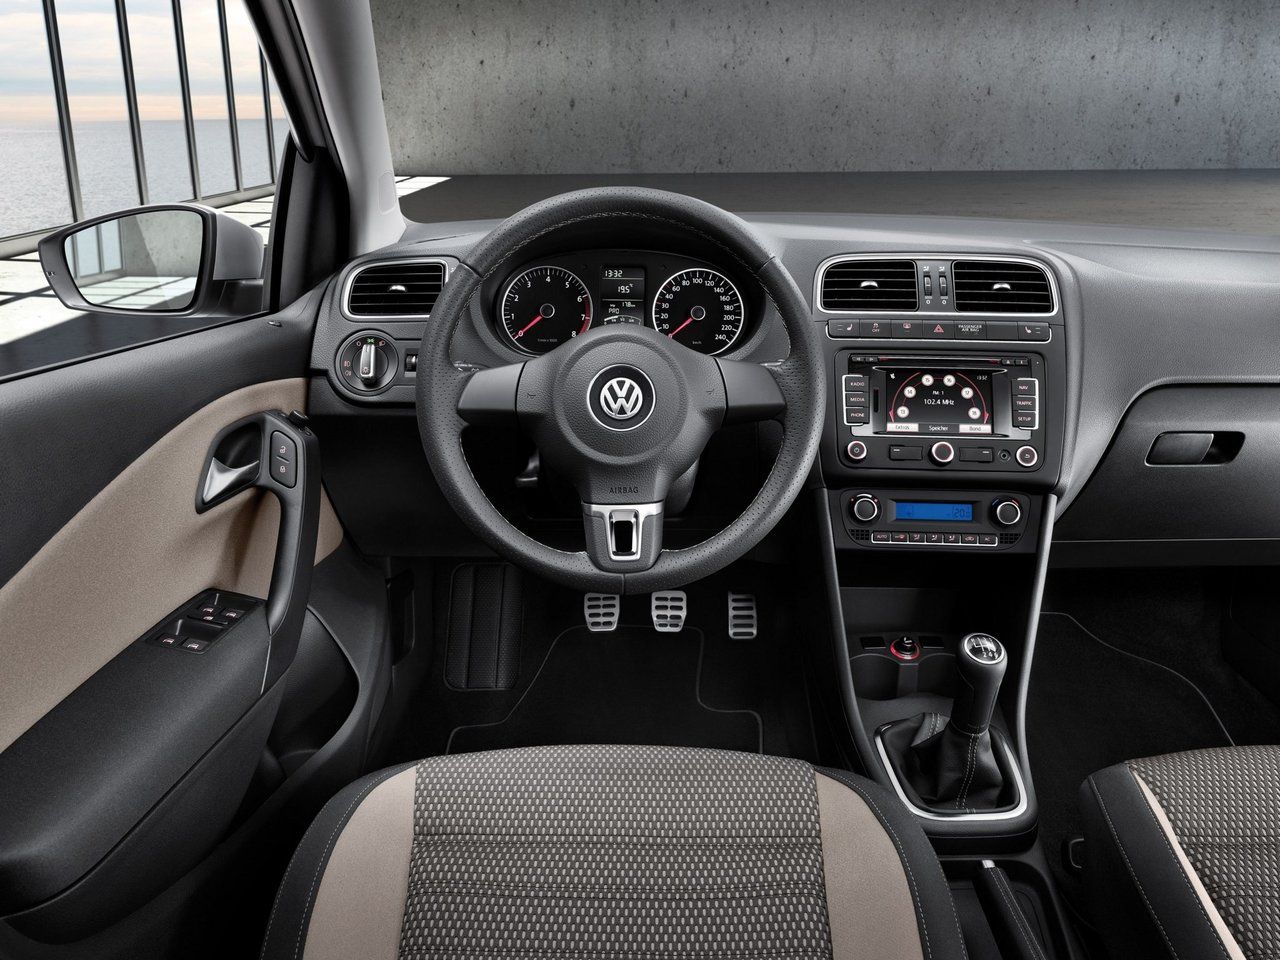 Volkswagen Polo 2009 Interior